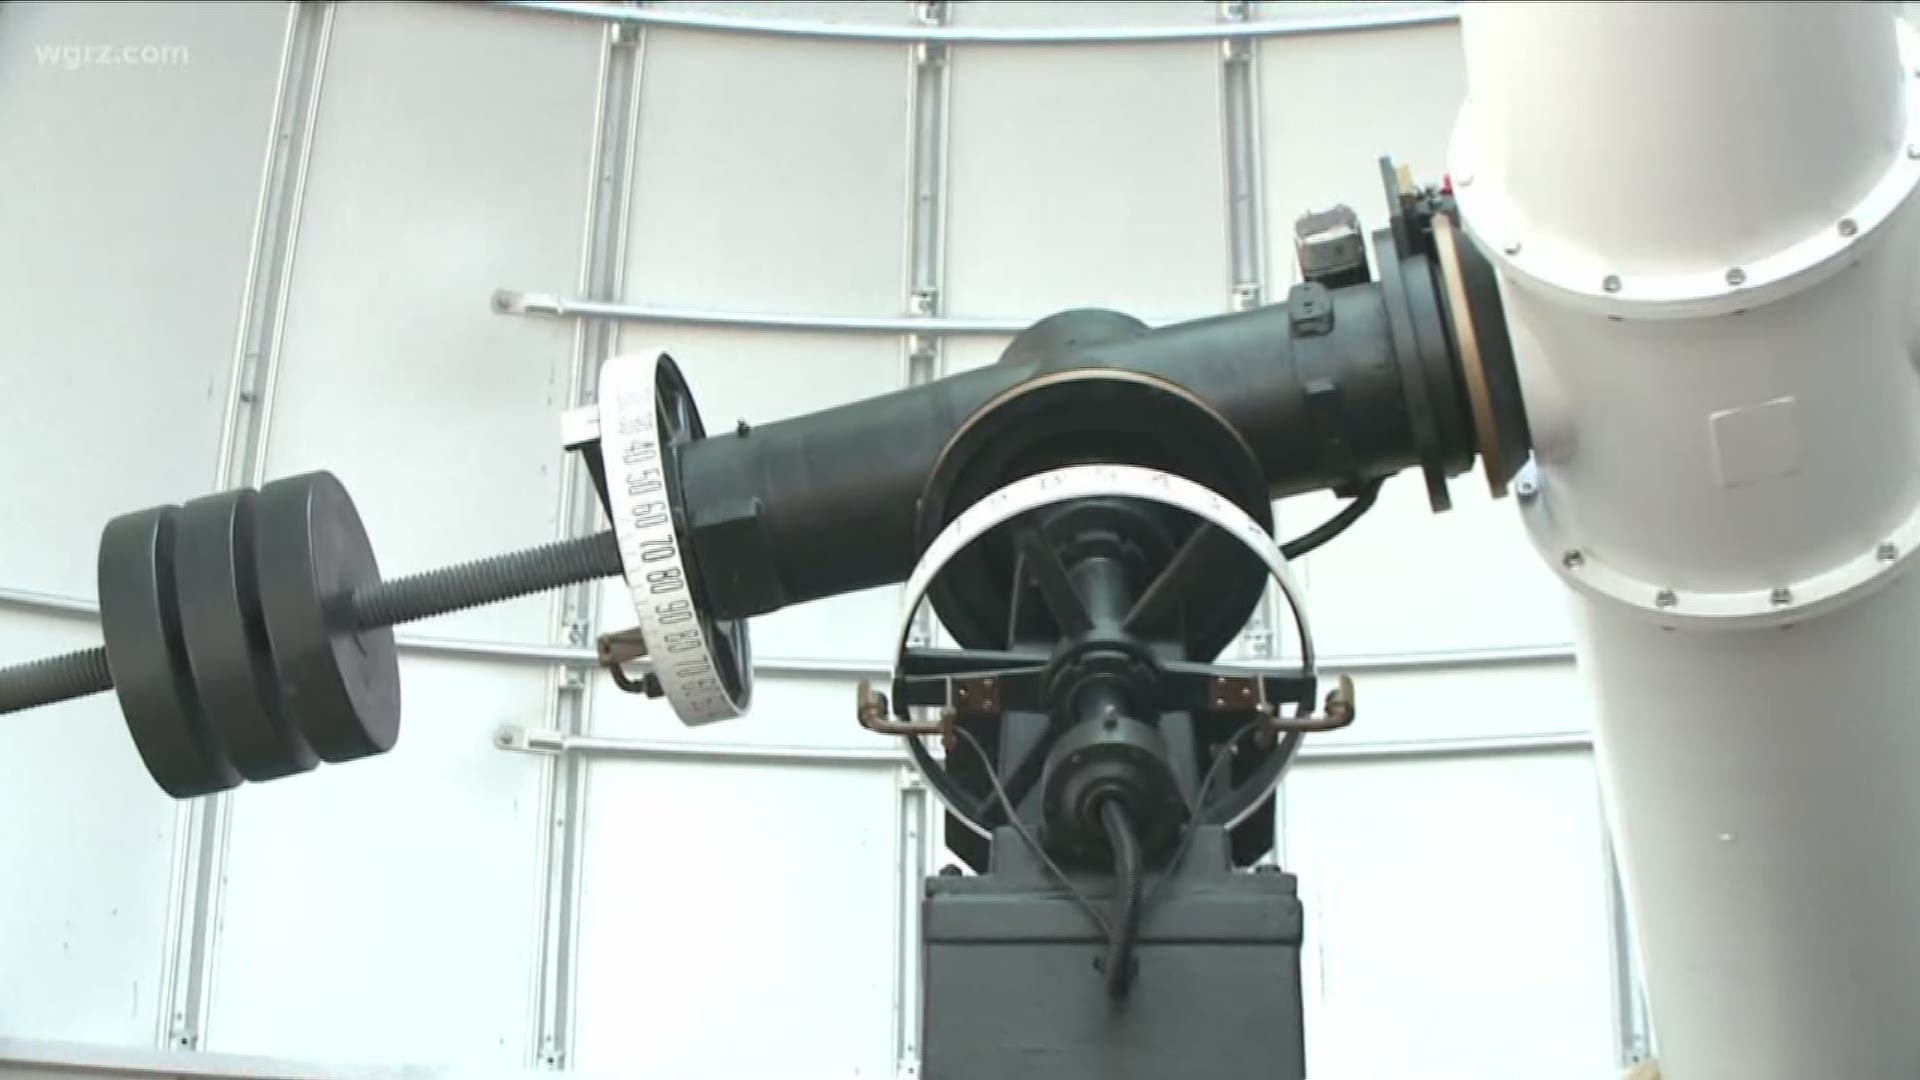 Buffalo Science Museum Telescope Open Again